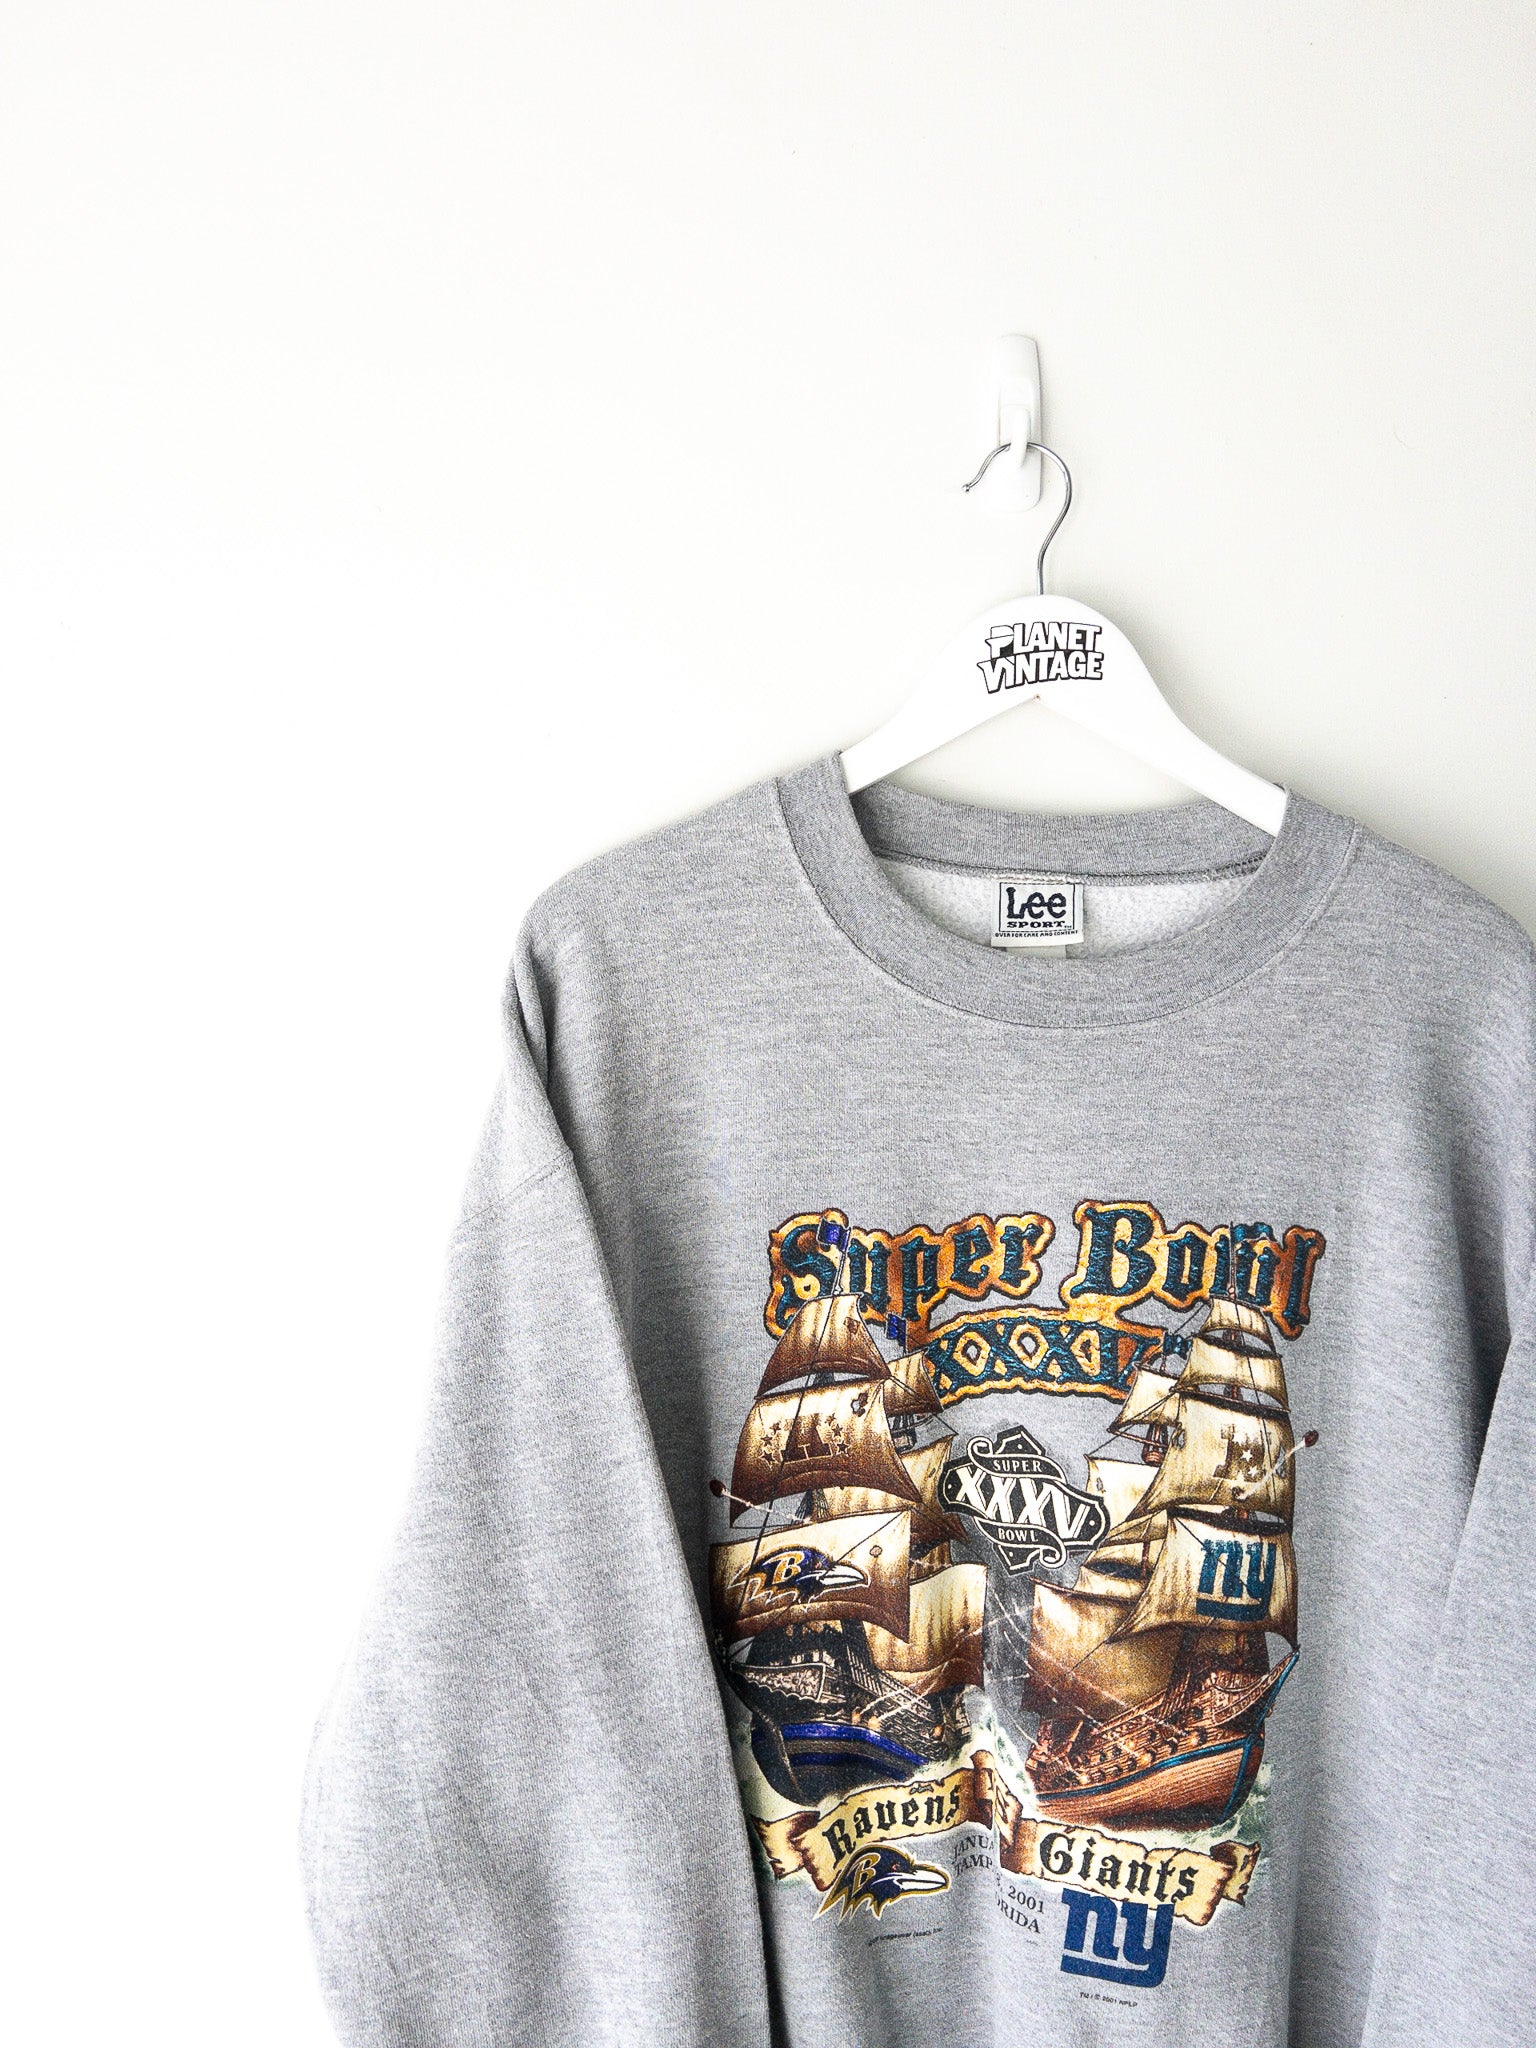 Vintage Super Bowl 2001 Sweatshirt (XL)